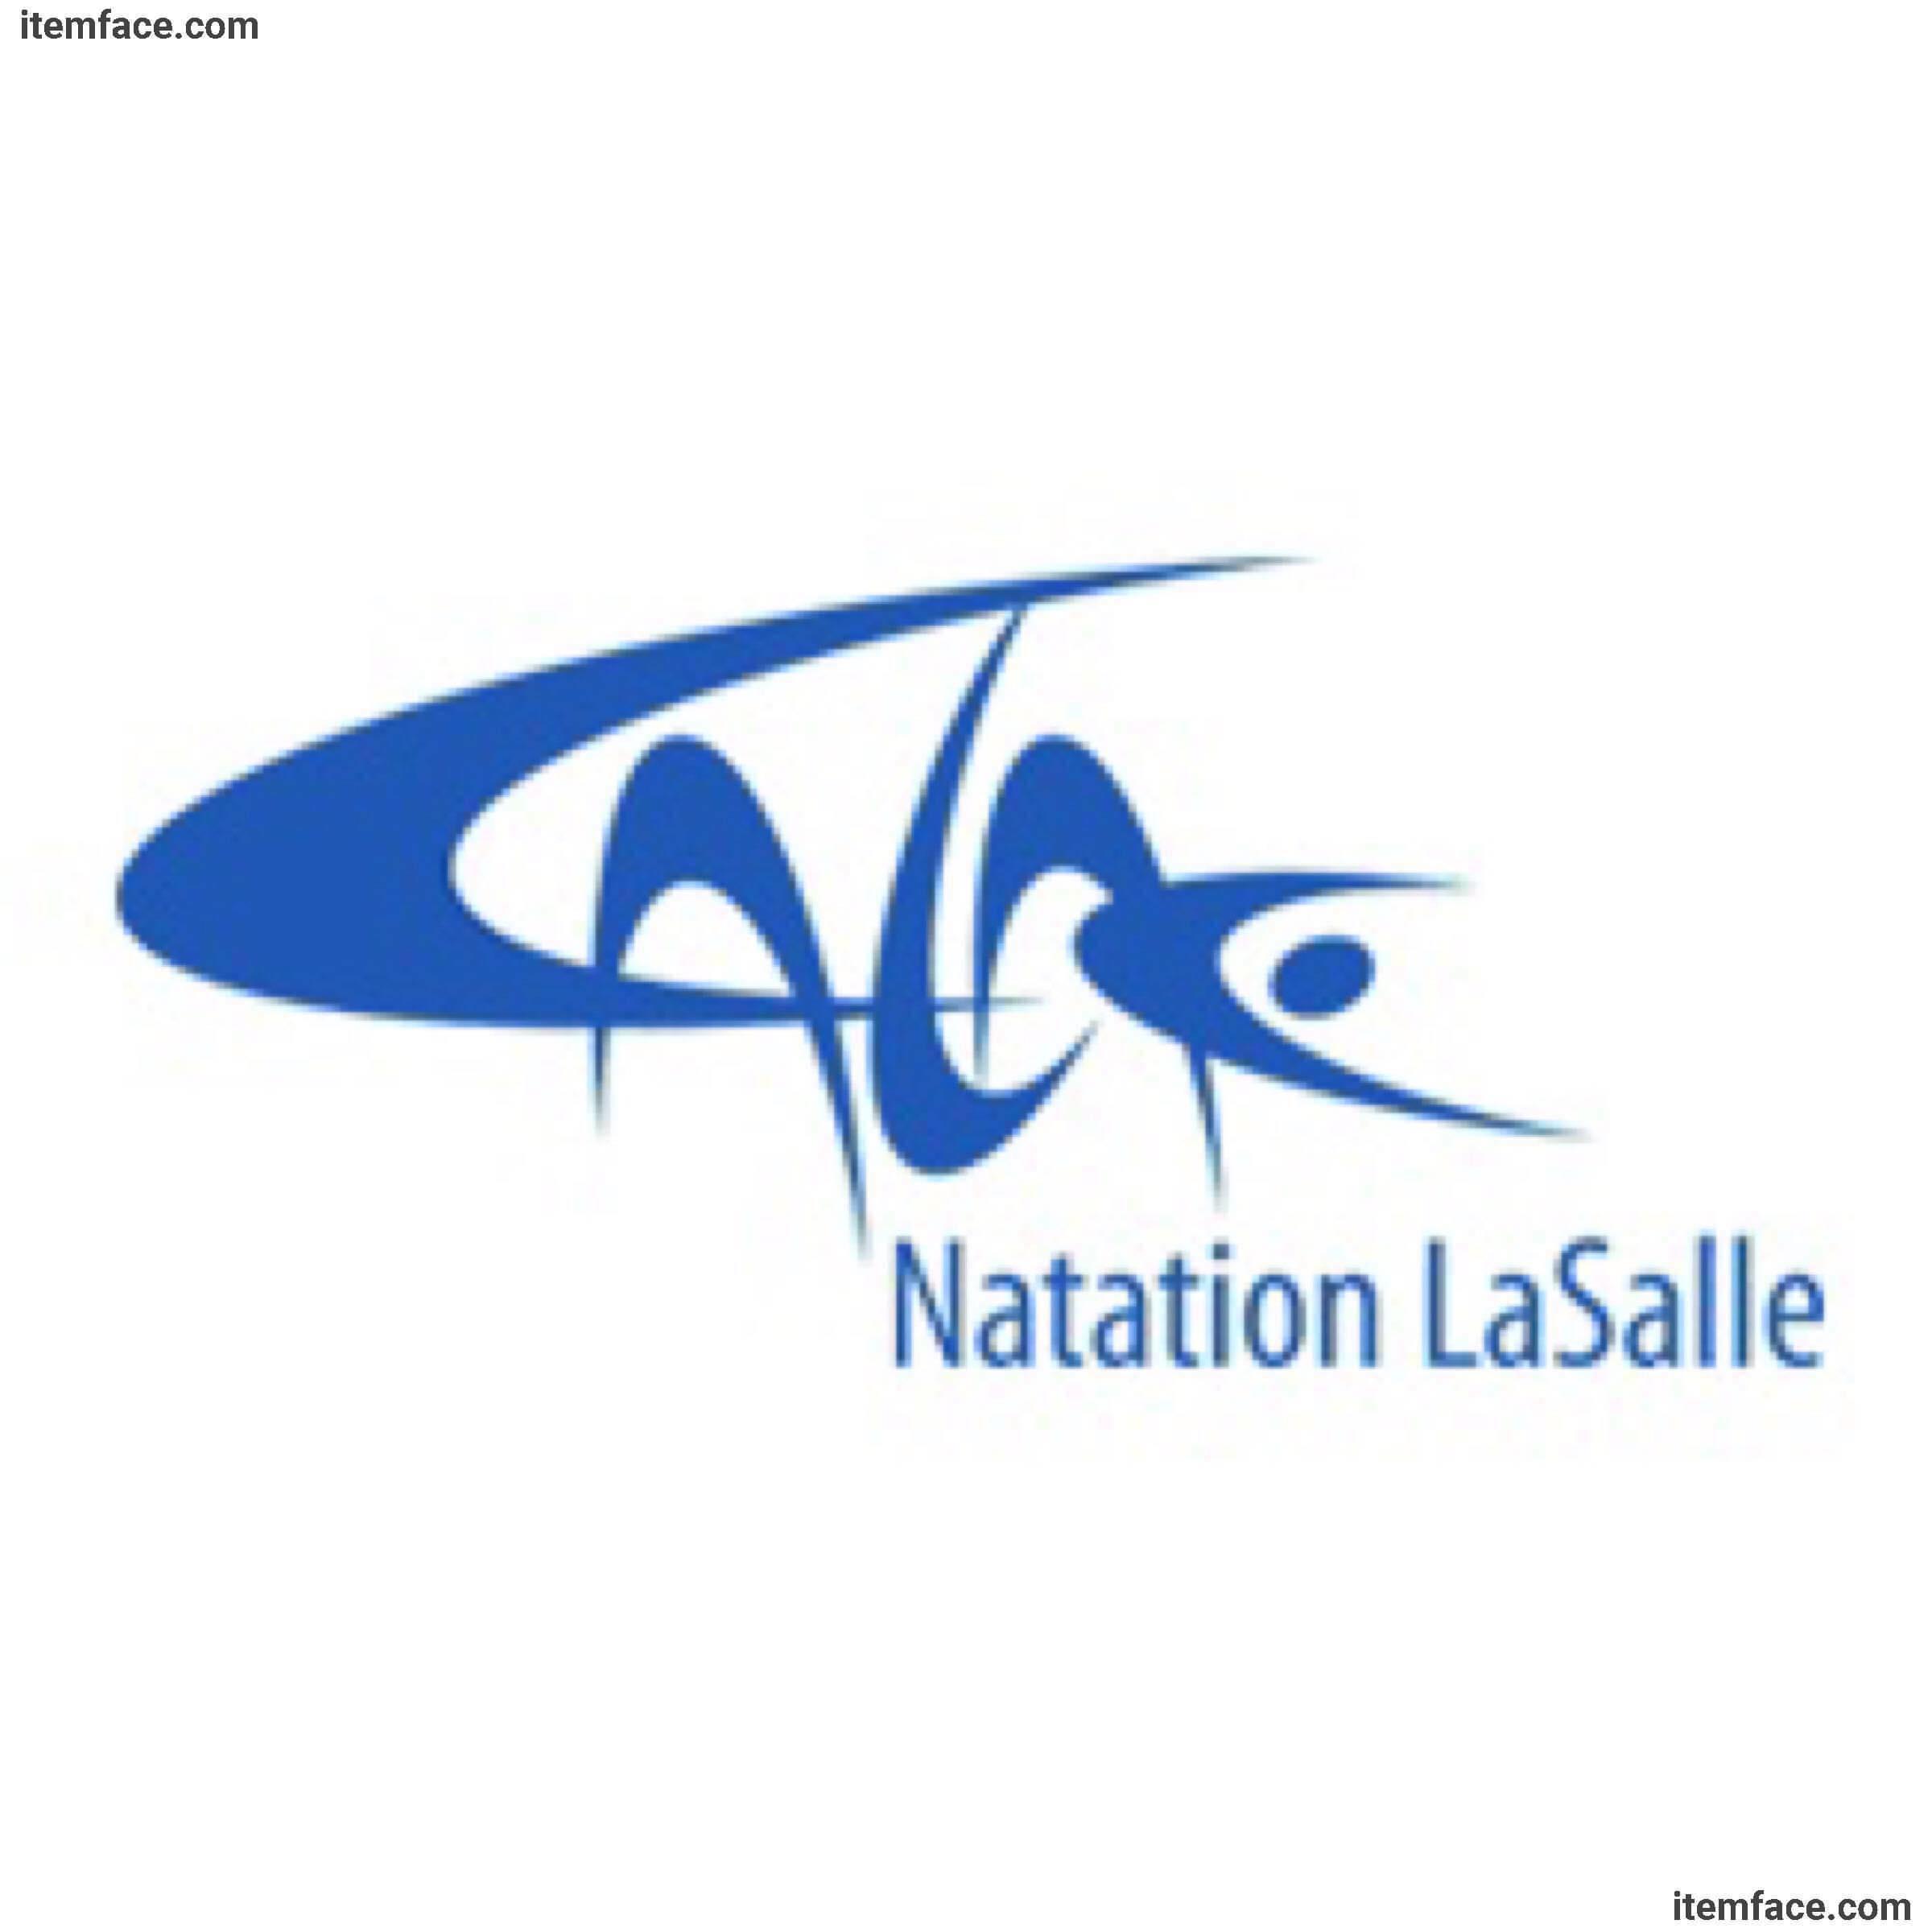 Club de Natation LaSalle (CALAC) - Sports Club